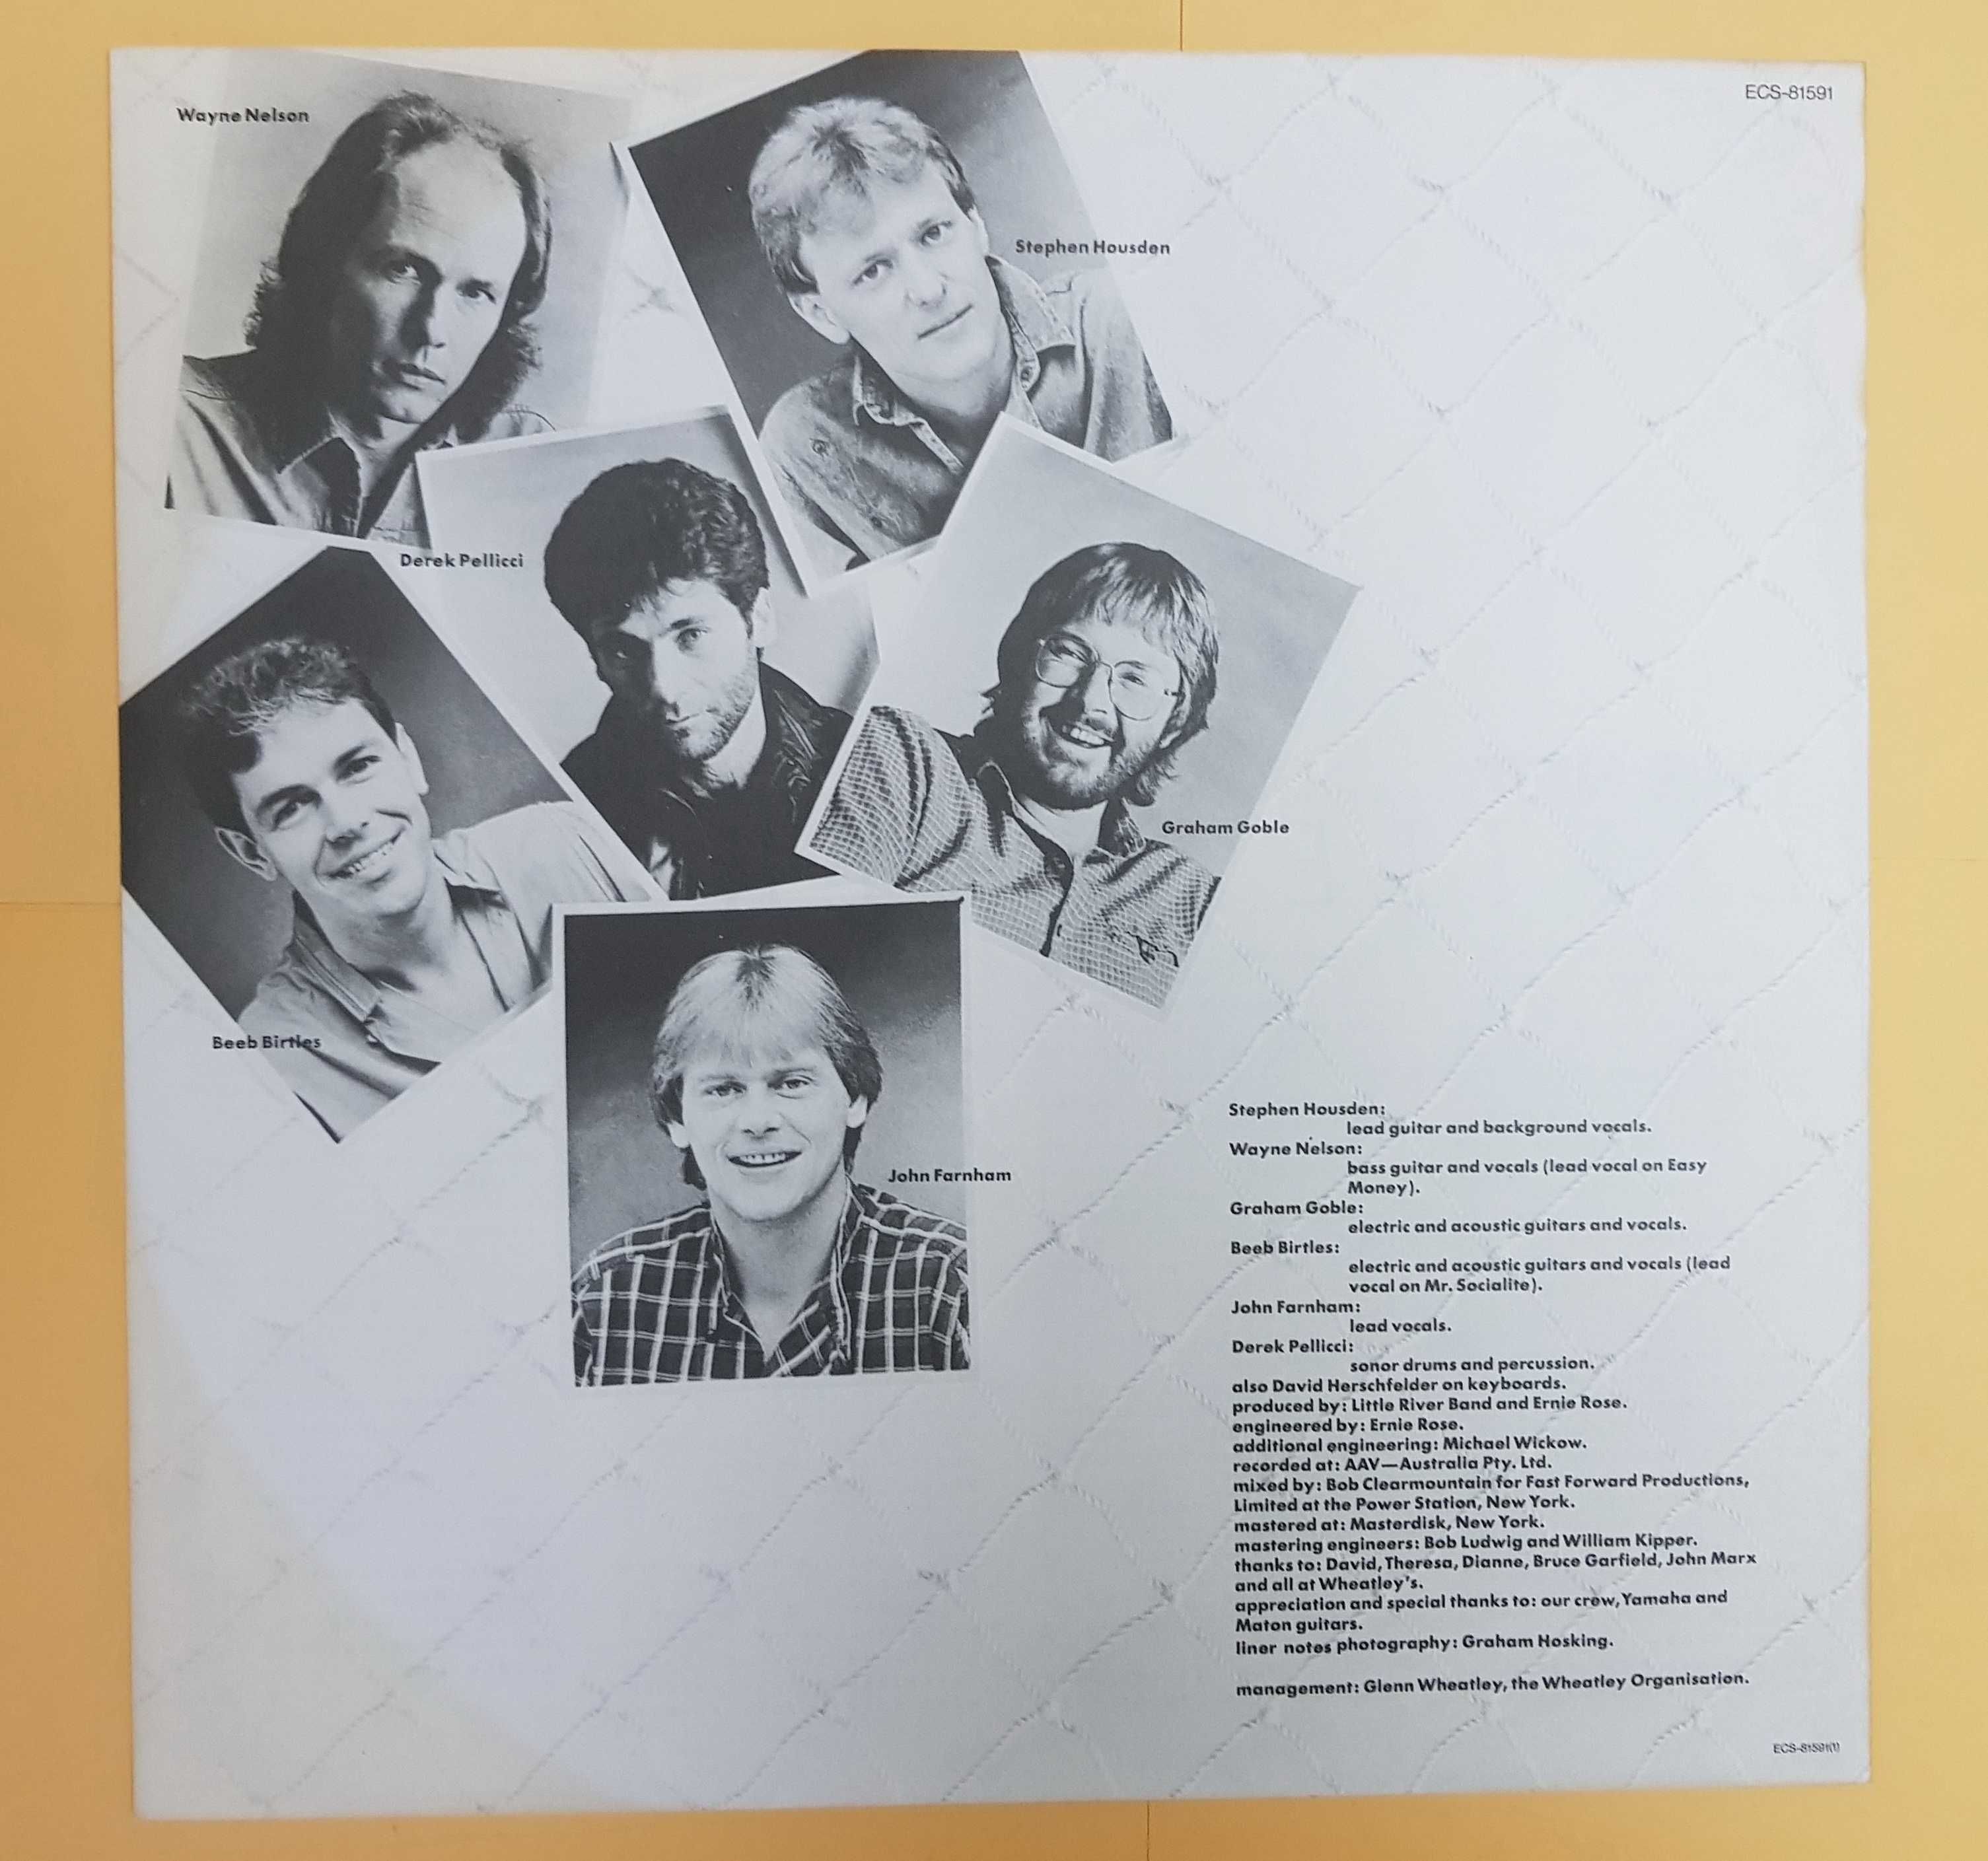 Виниловая пластинка Little River Band – The Net
(Япония, 1983)